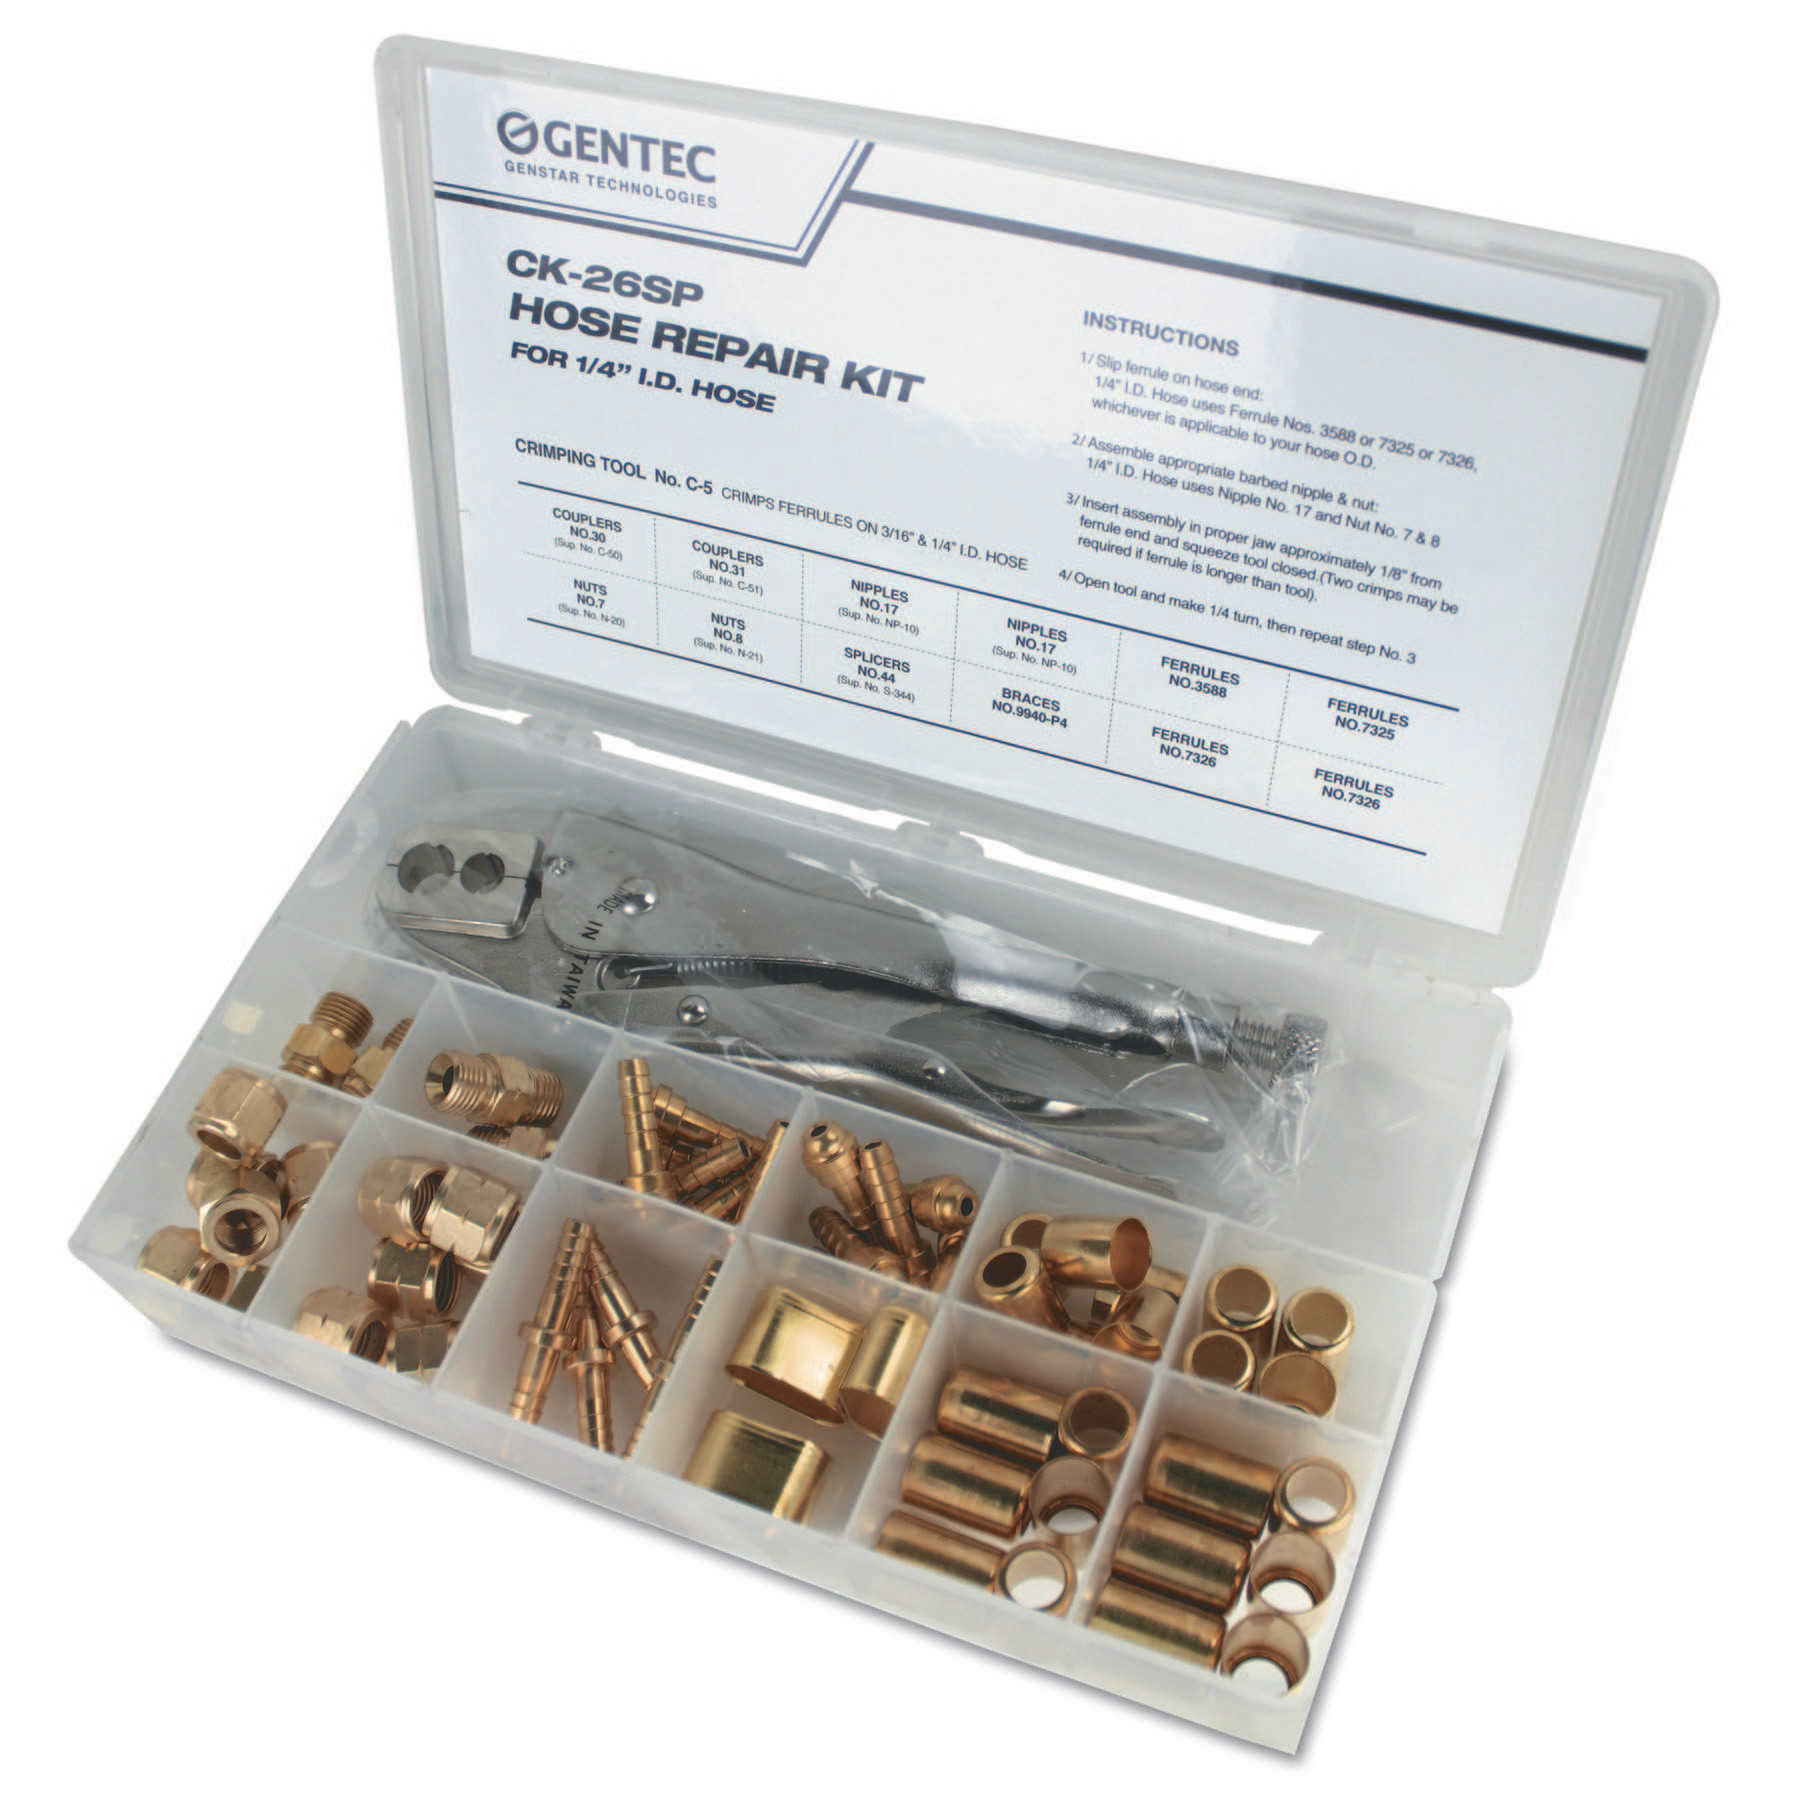 Gentec Hose Repair Kits, Includes Nuts, Ferrules, Couplers, Splicer, Pliers